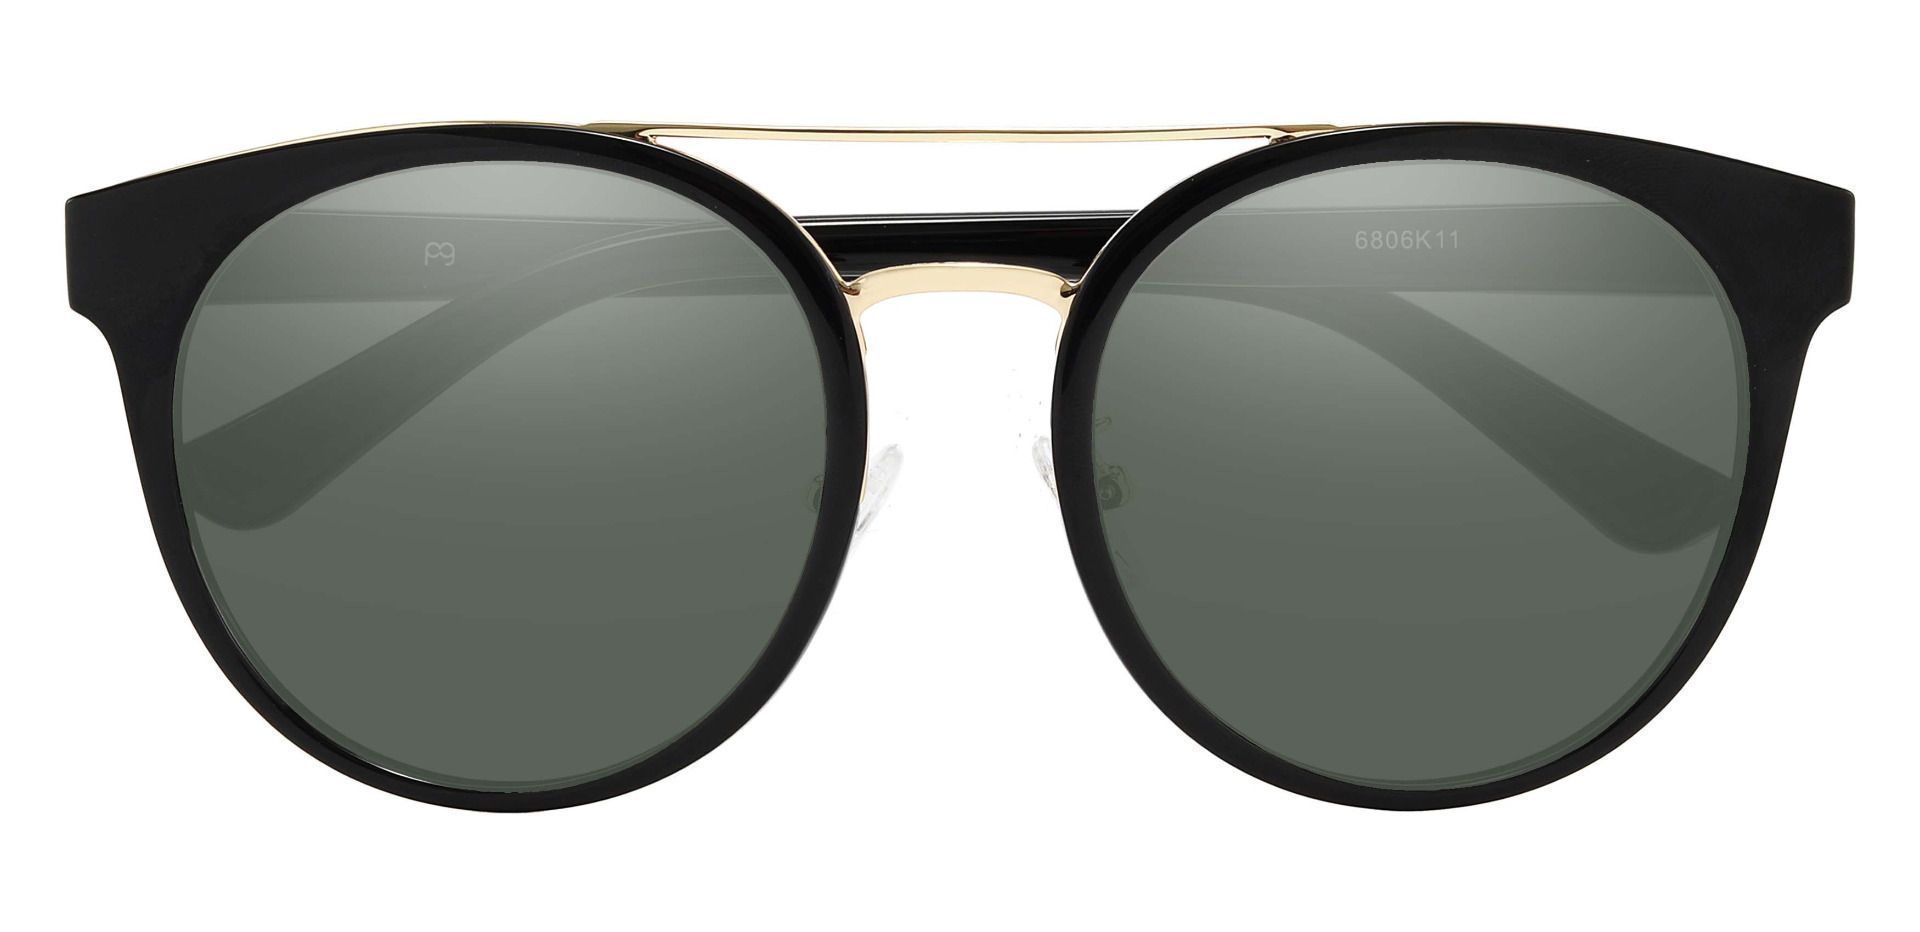 Oasis Aviator Prescription Sunglasses - Black Frame With Green Lenses